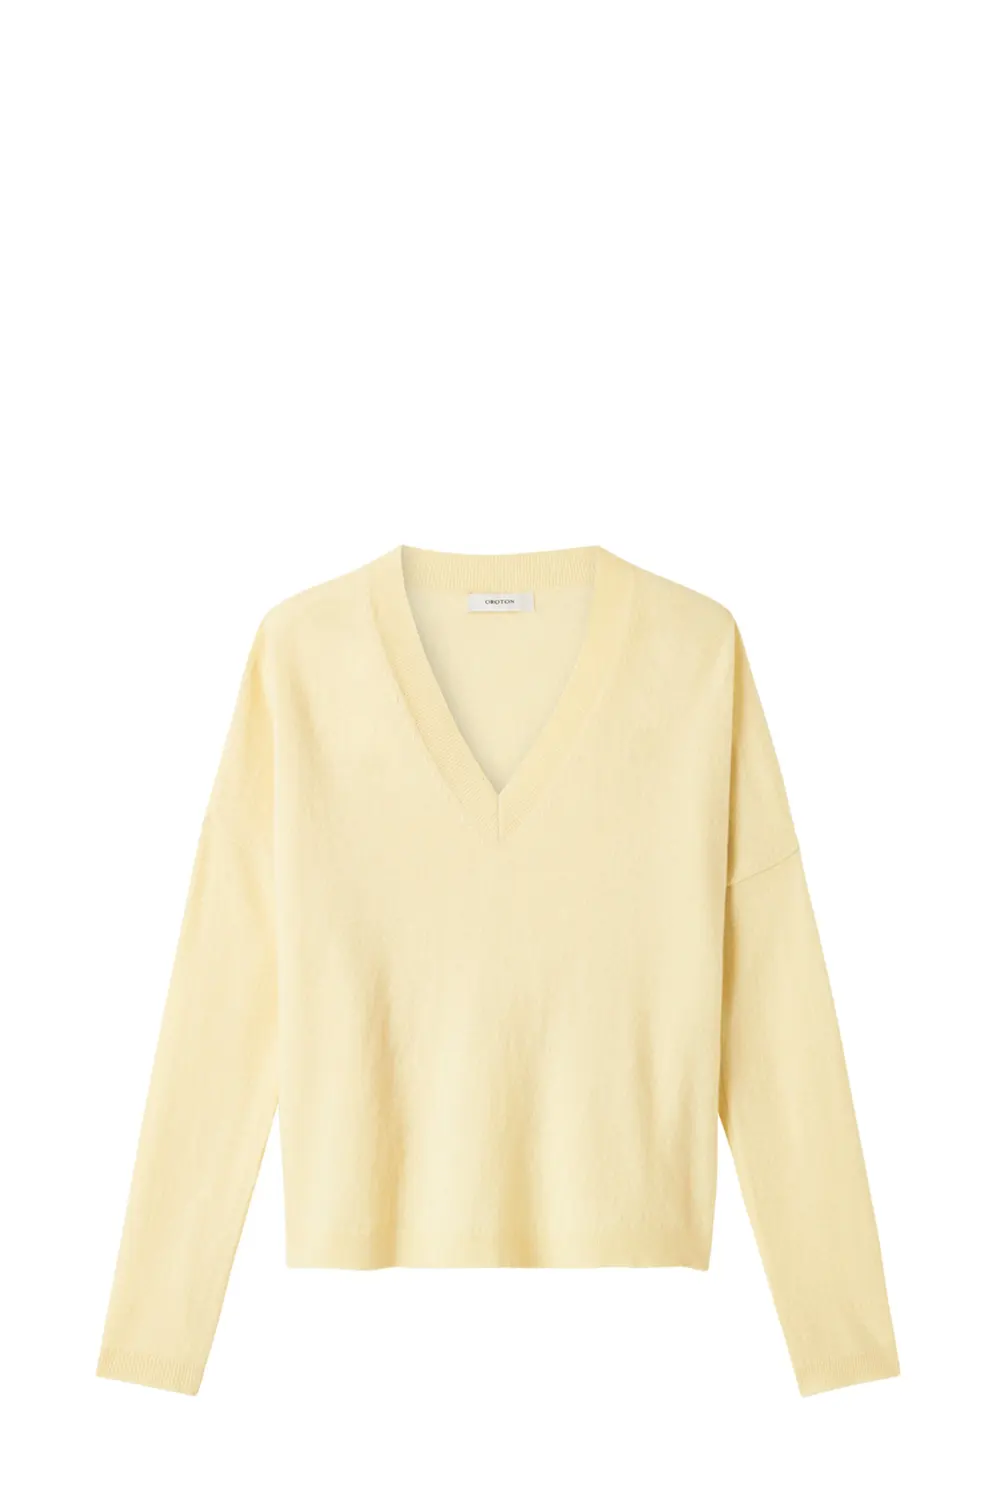 Oroton Lemon V Neck Knit Jumper Sweater Yellow